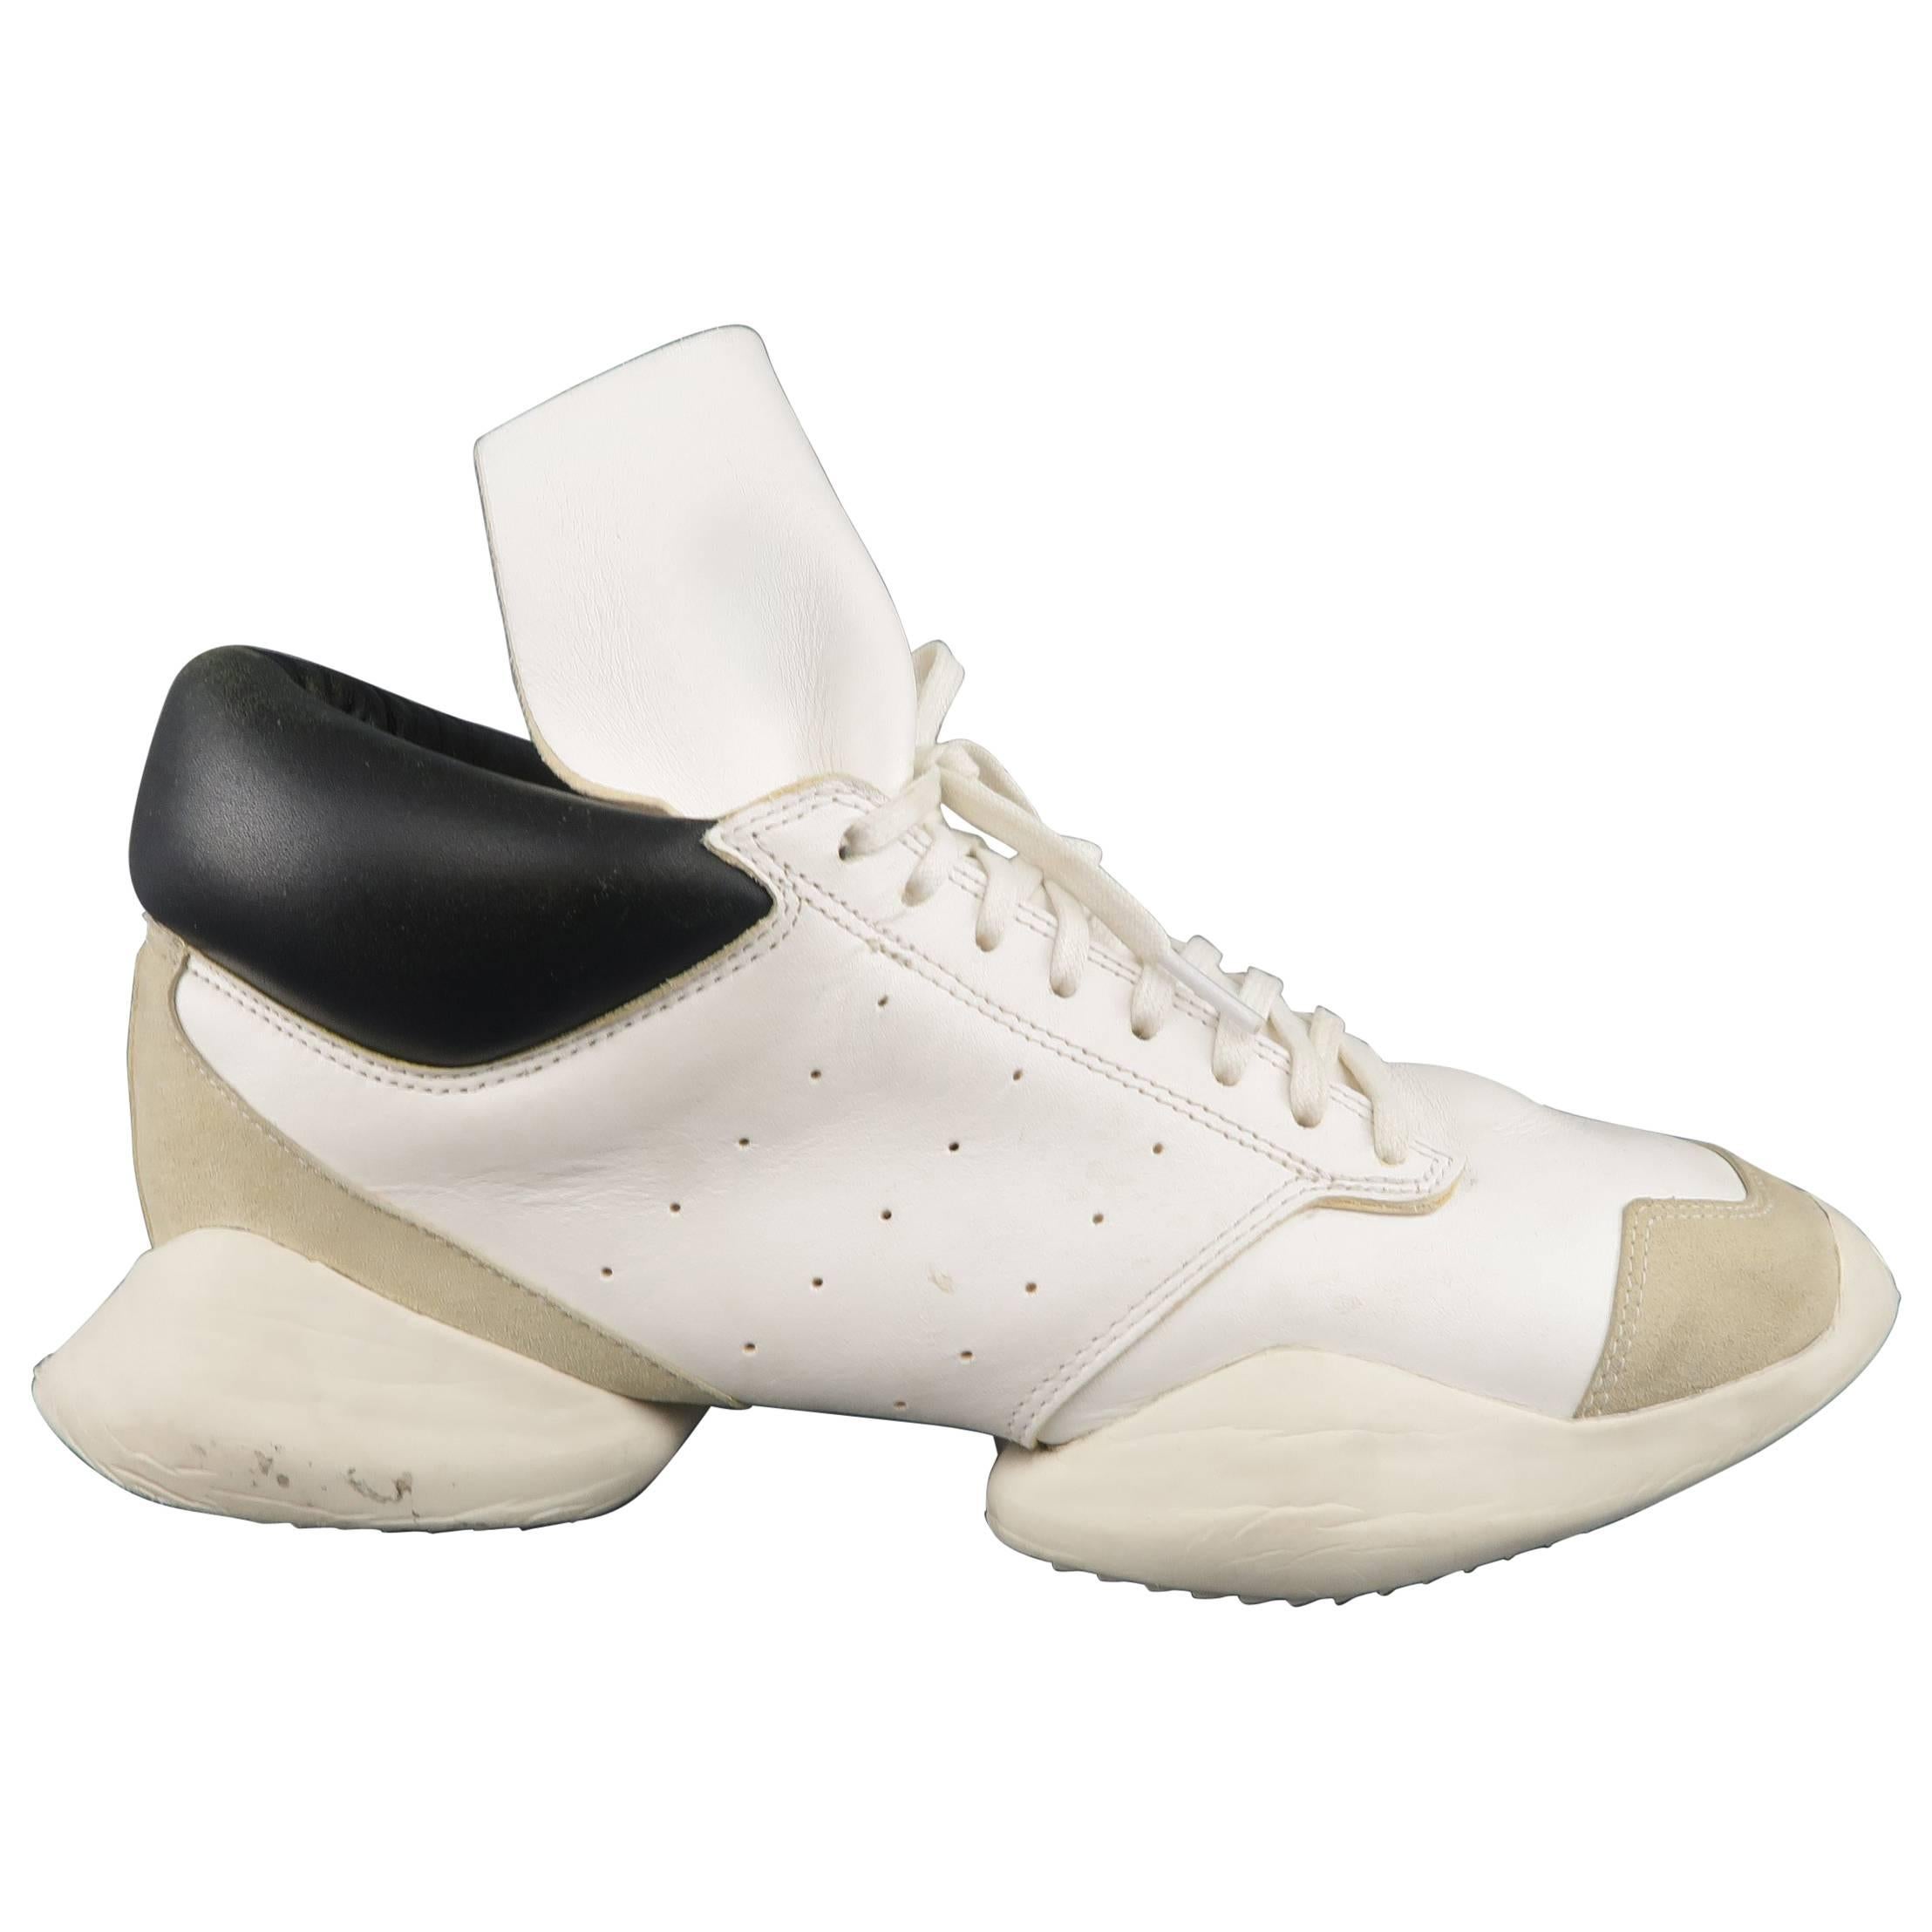 RICK OWENS Adidas Size 10.5 White & Black Leather Split Sole Sneakers